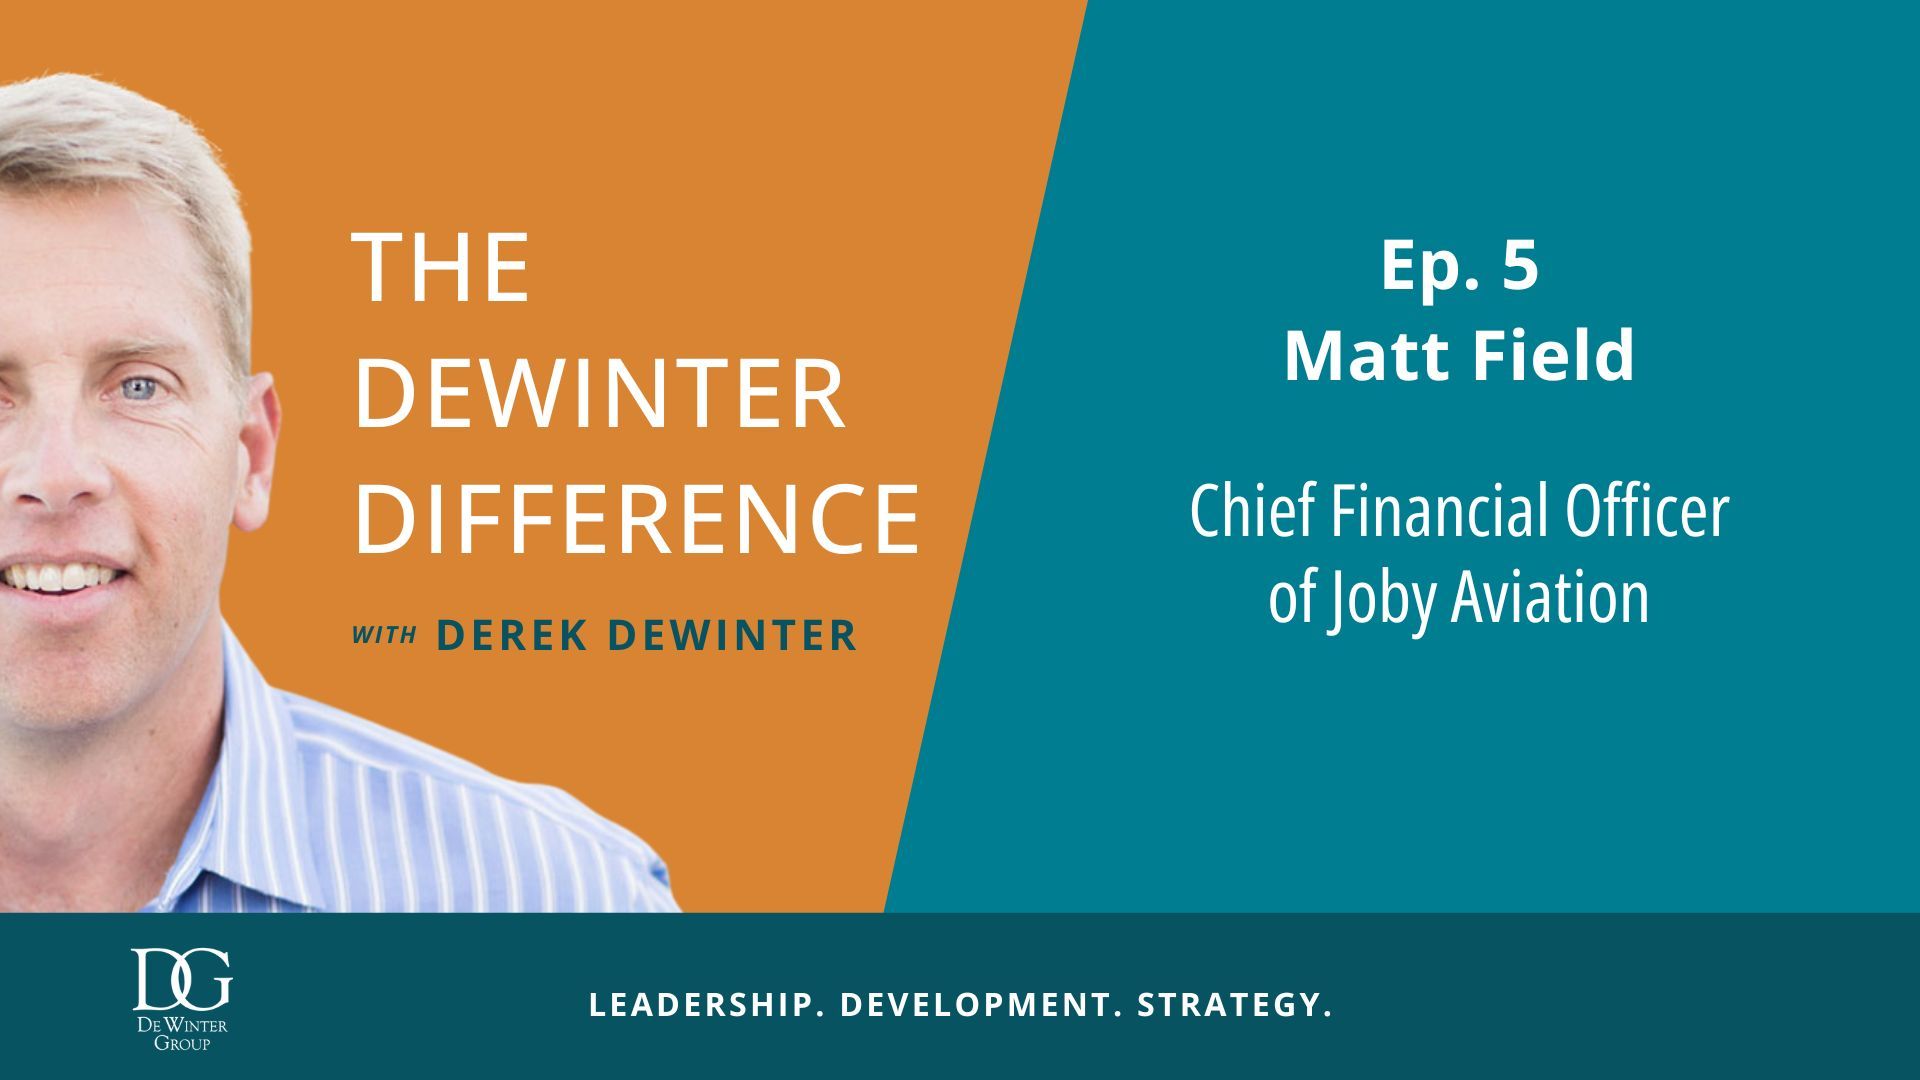 The DeWinter Difference: Matt Field, Chief Financial Officer of Joby Aviation